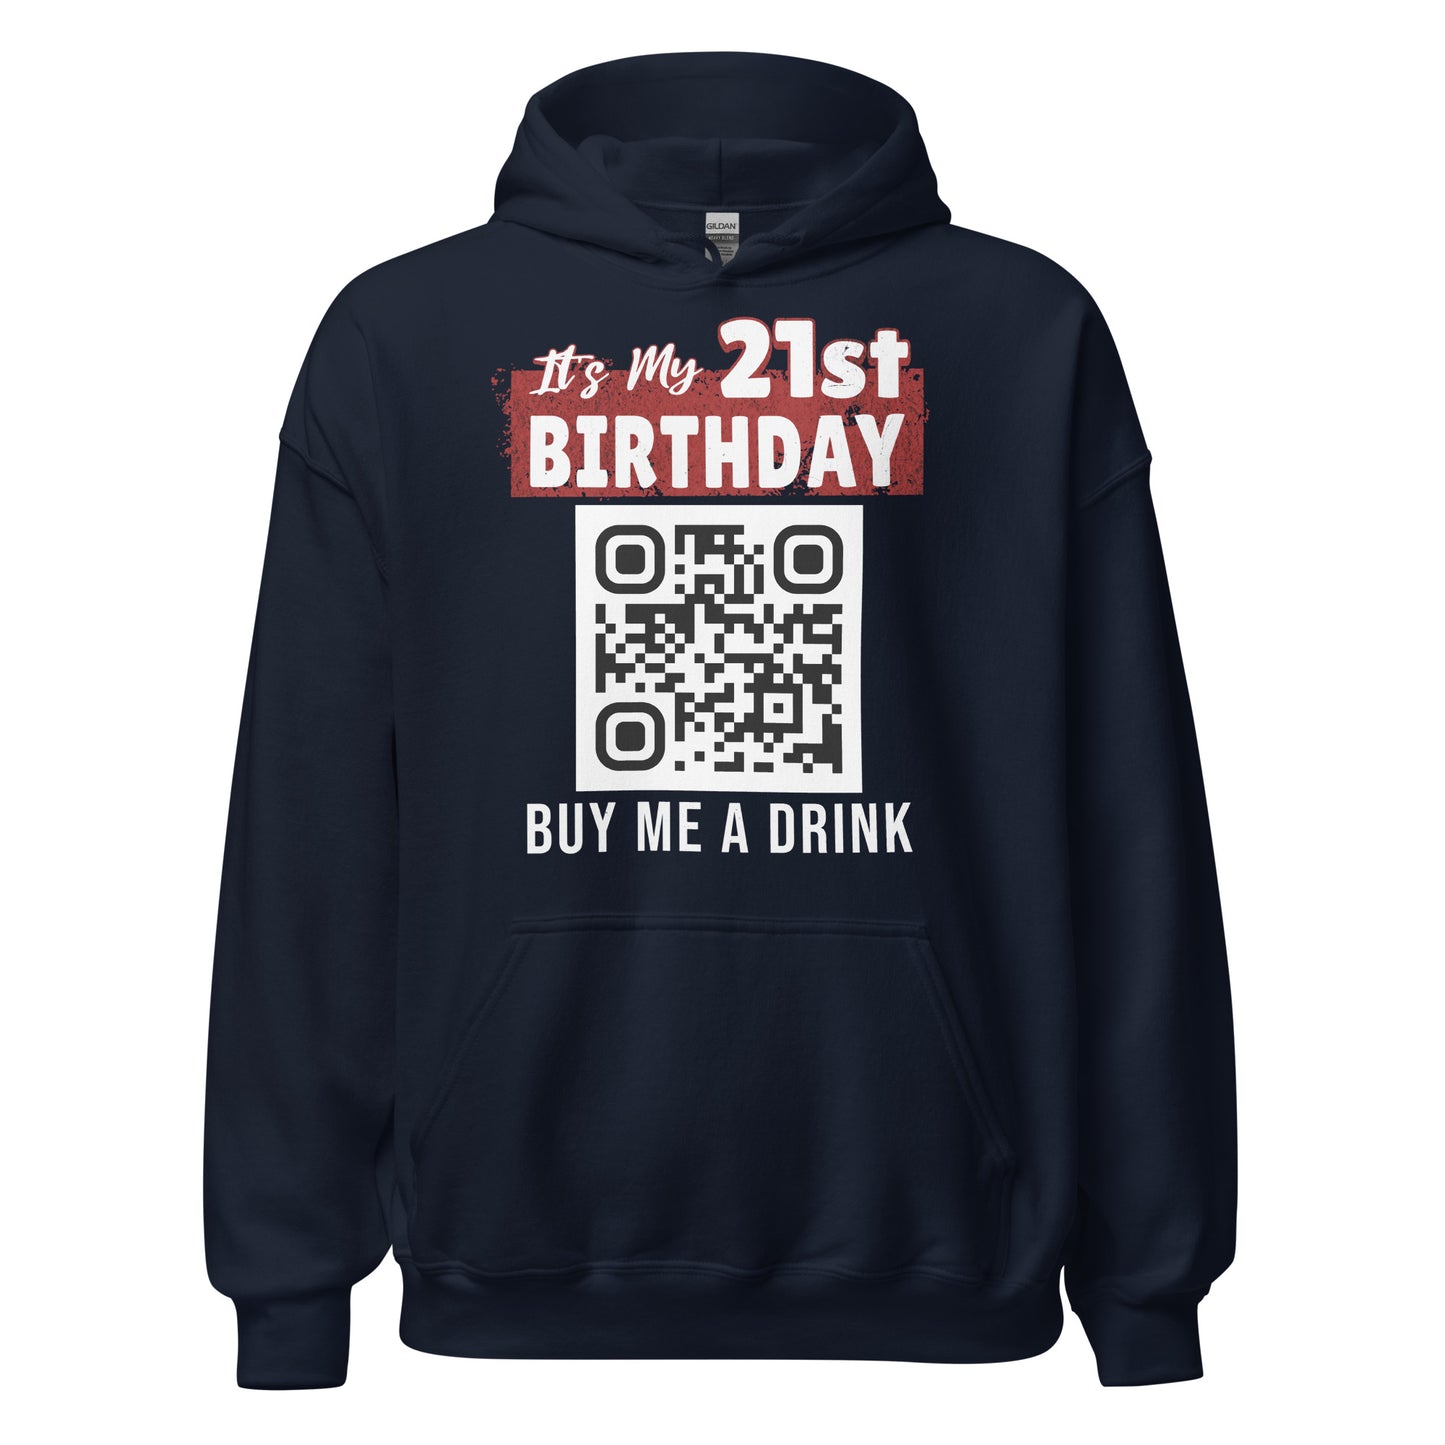 It's My 21st Birthday Buy Me A Drink Hoodie - Personalizable